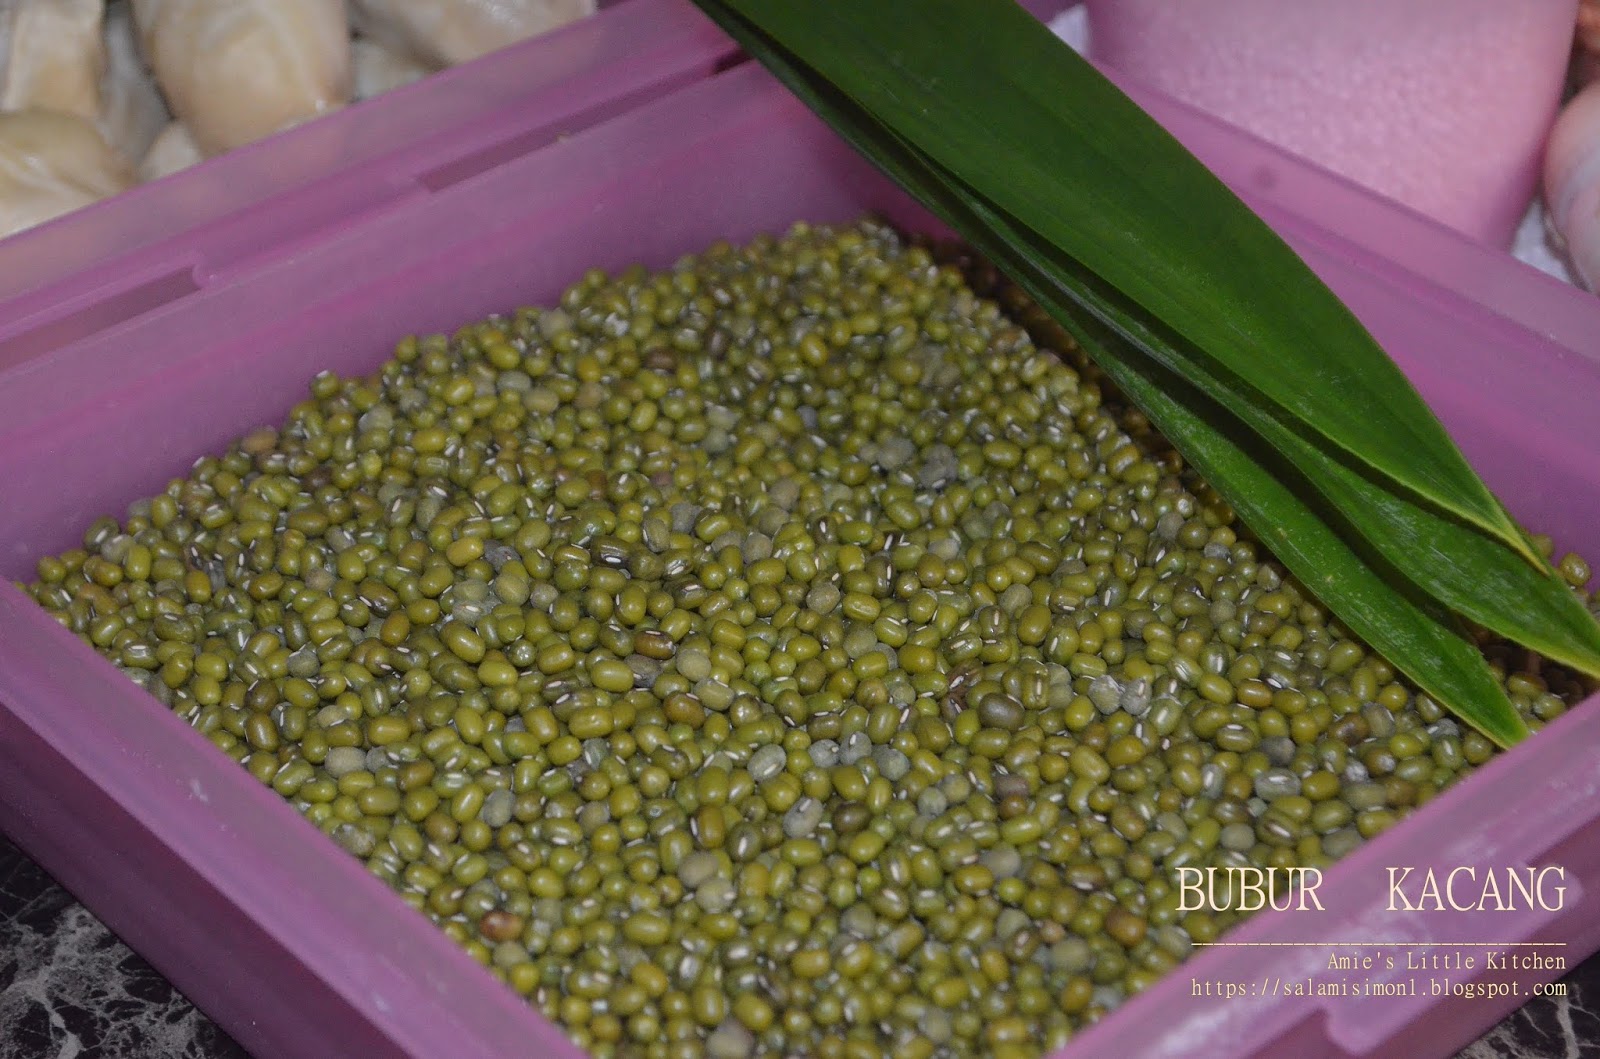 AMIE'S LITTLE KITCHEN: Bubur Kacang Campur Durian